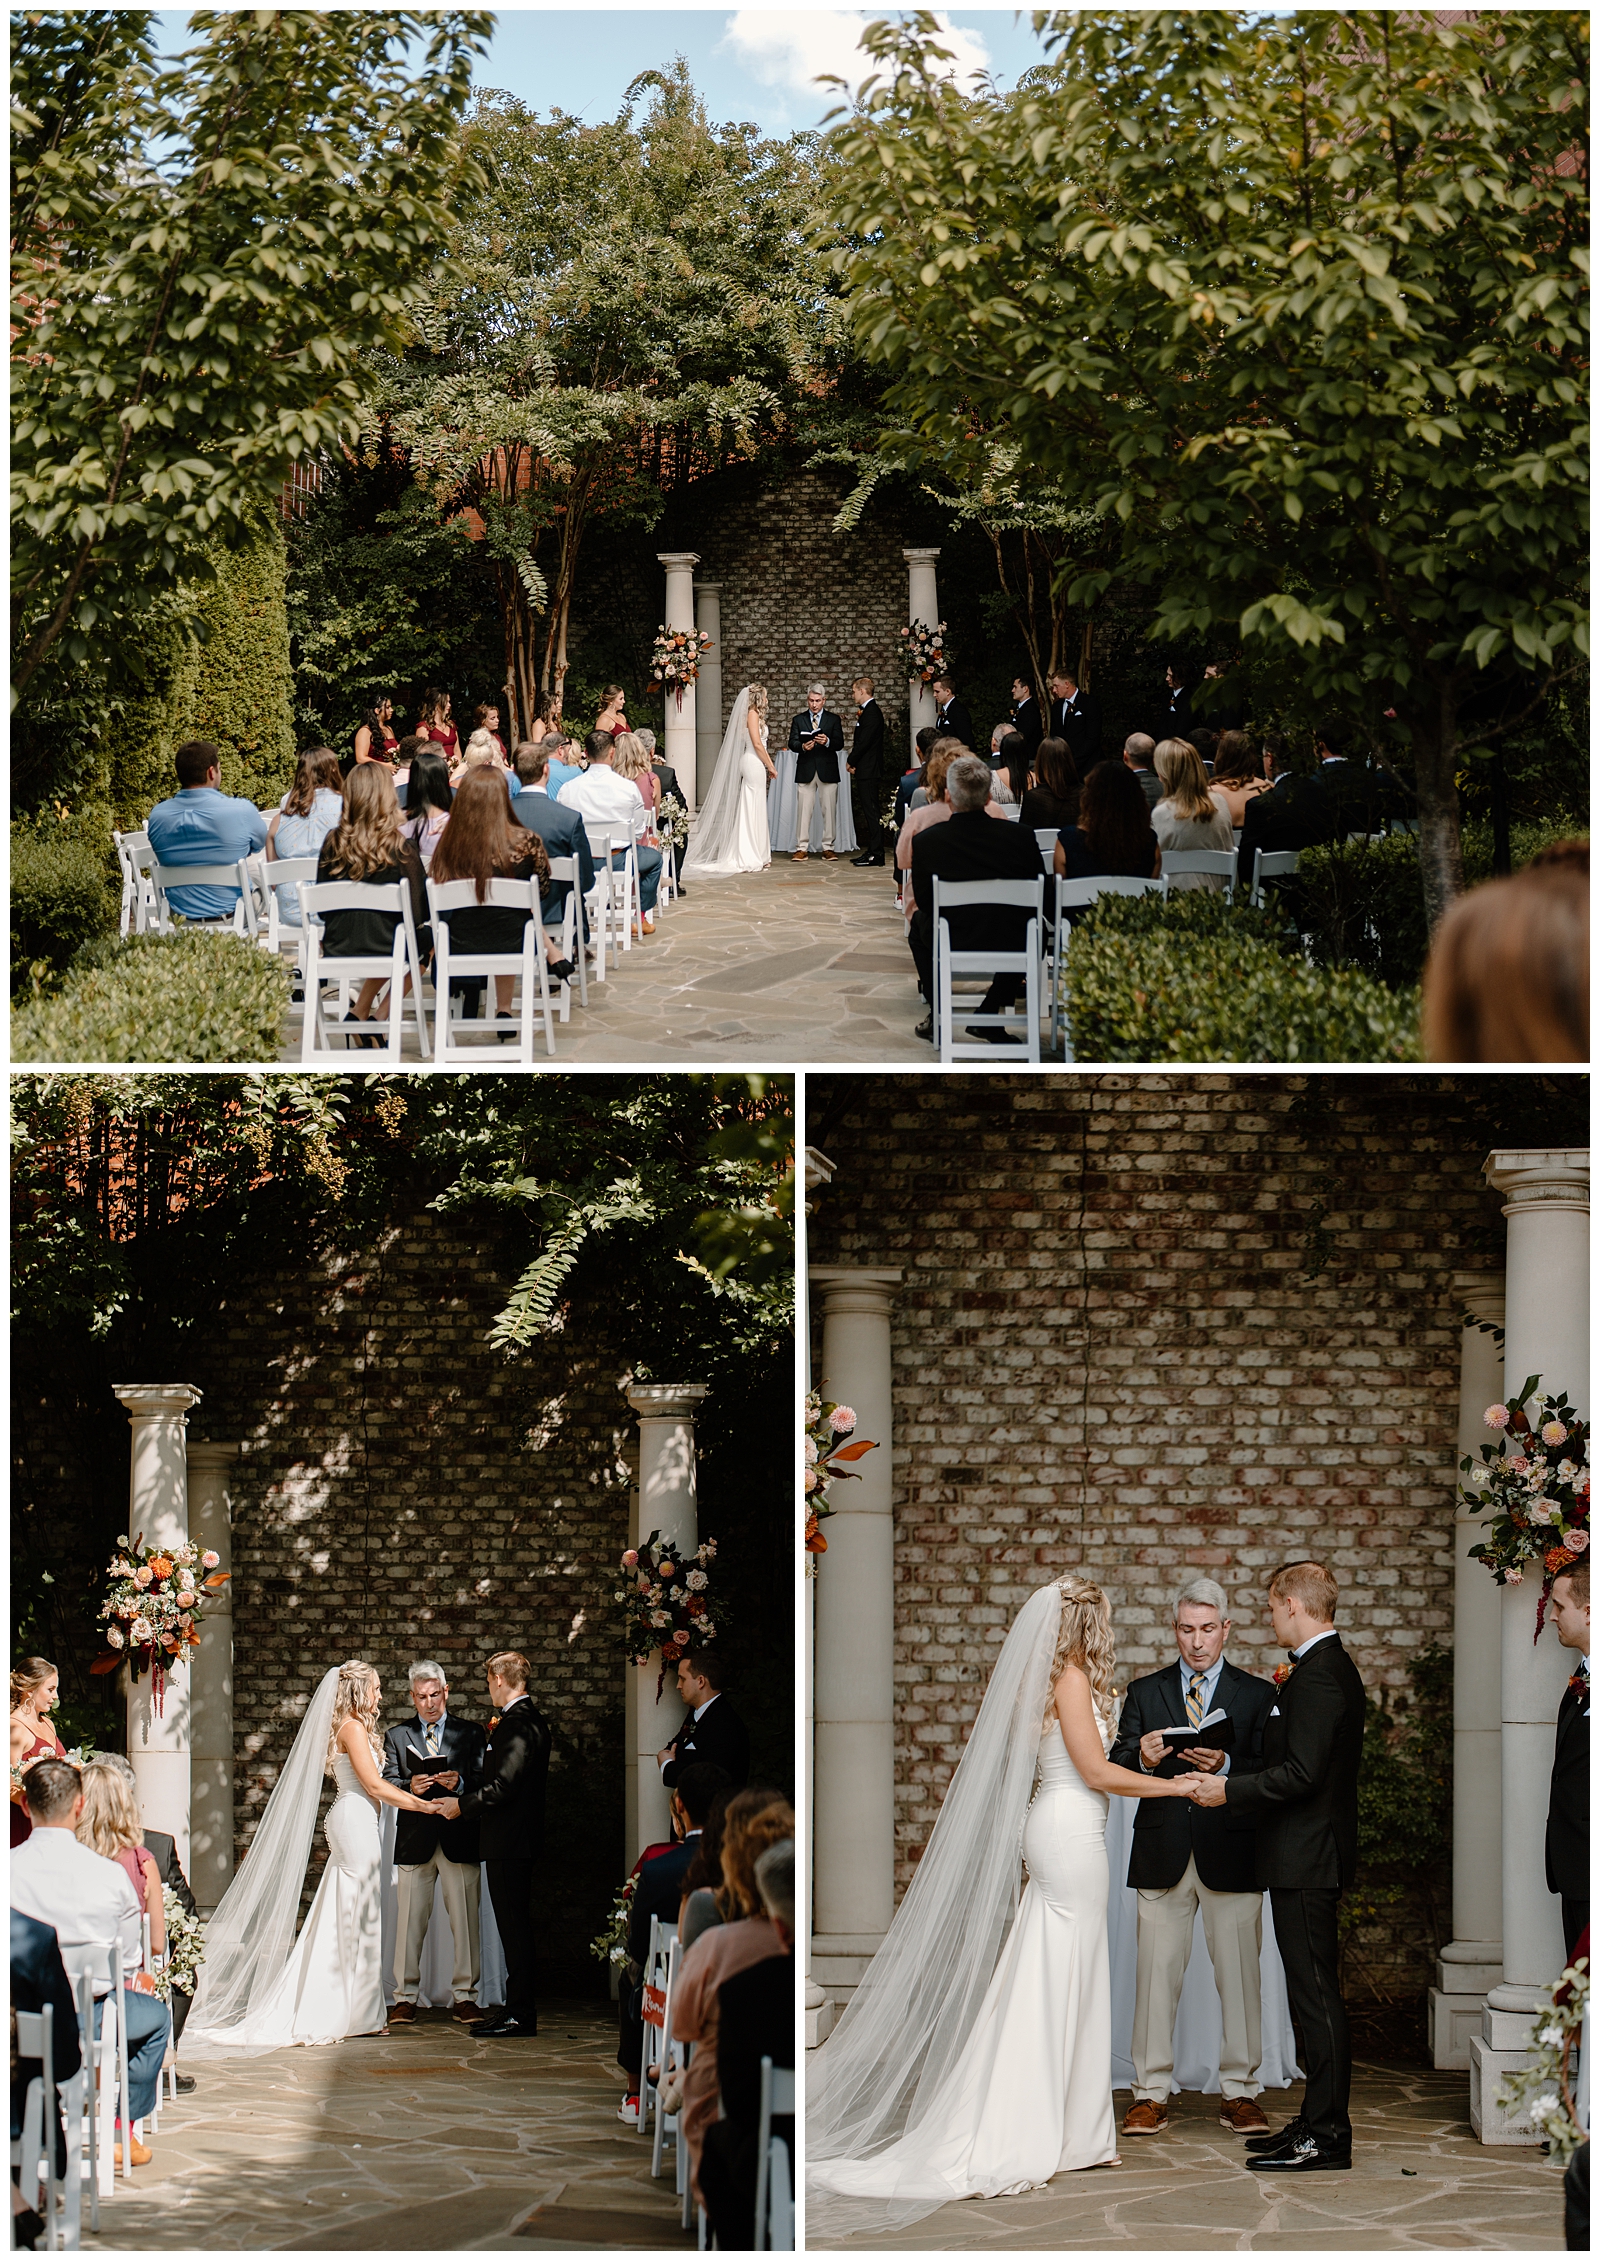 Outdoor wedding ceremony at Greensboro NC's historic Revolution Mill